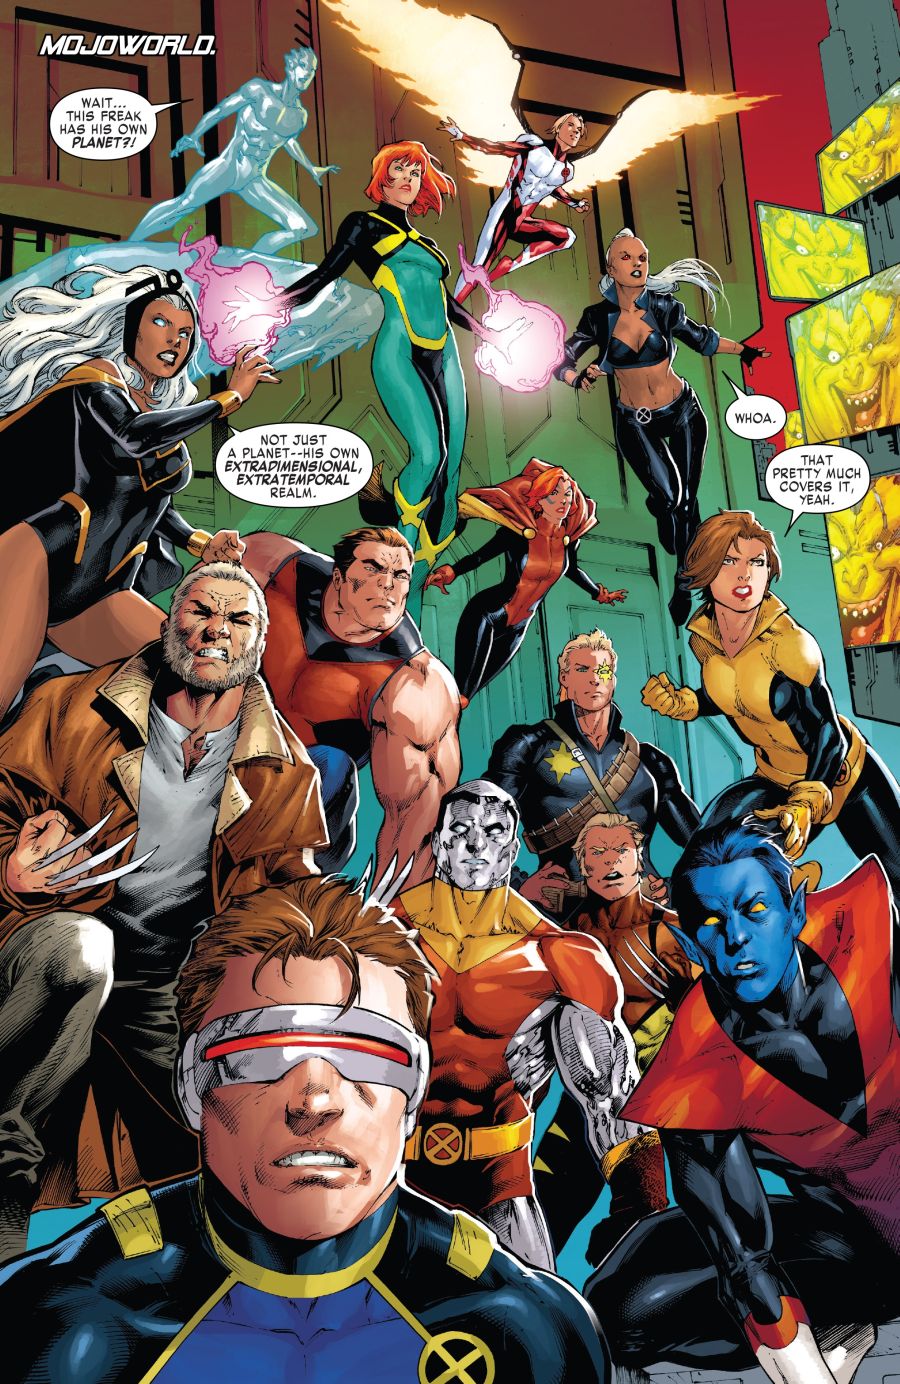 X-Men Gold #15